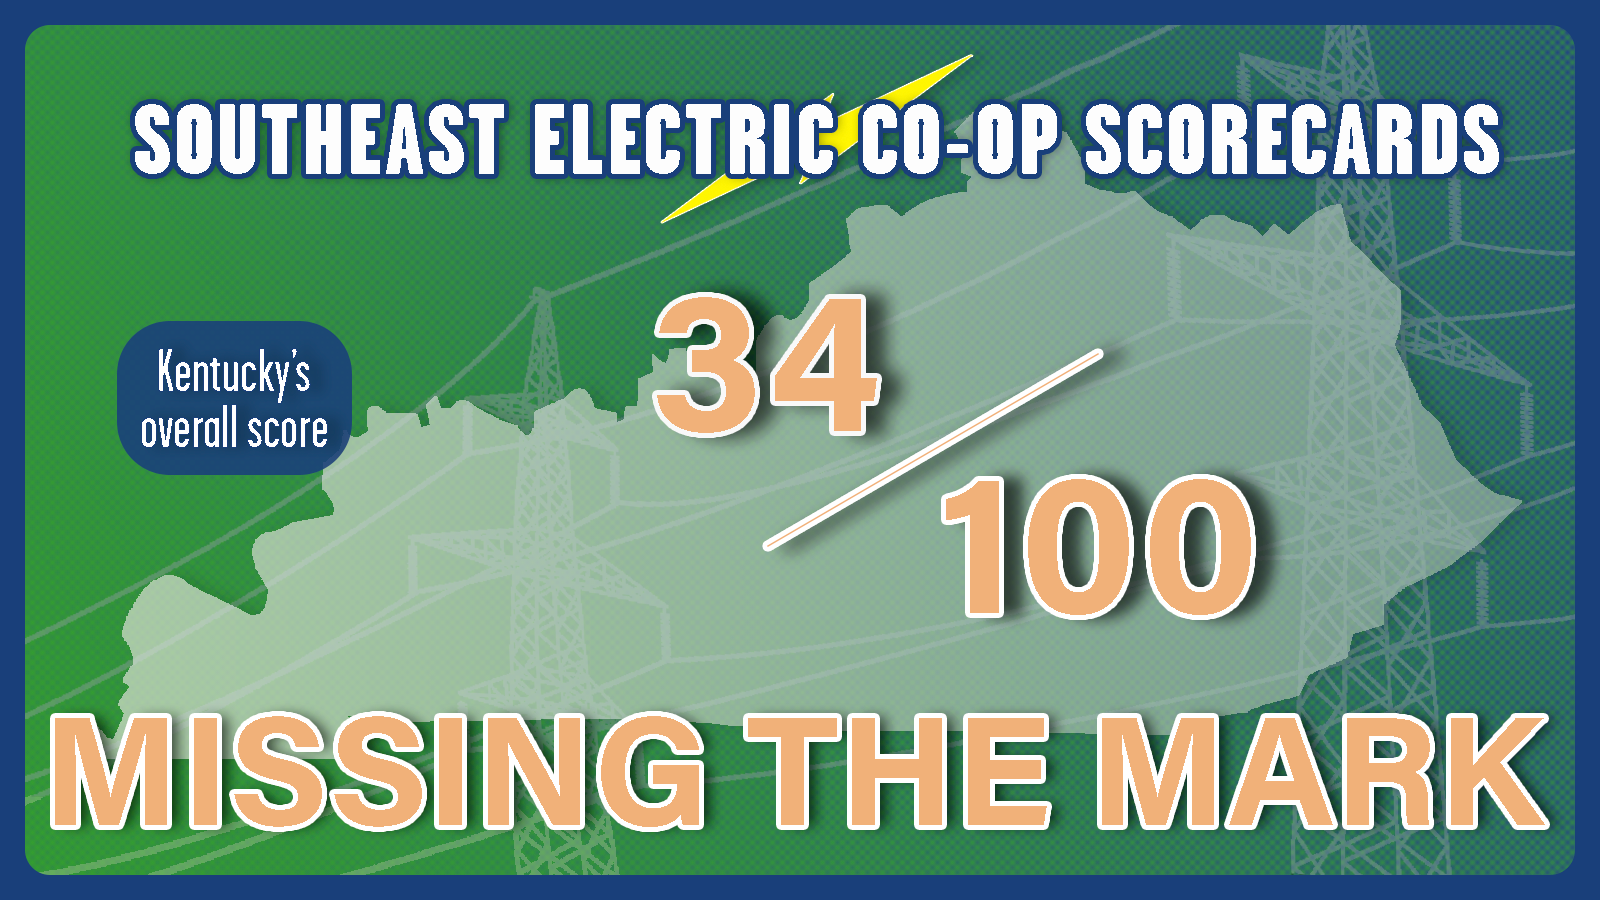 Kentucky electric cooperative scorecard overall score